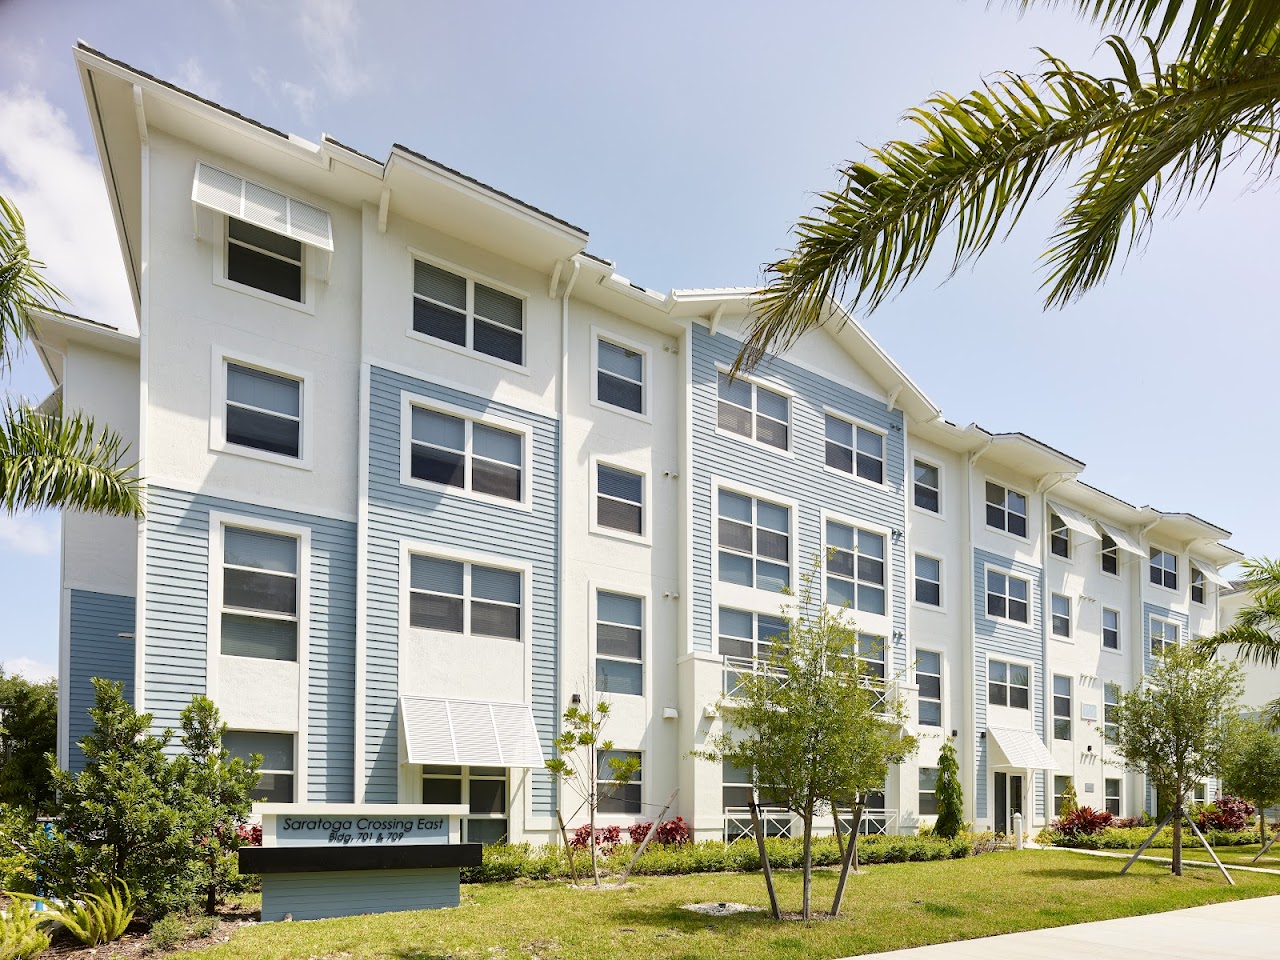 Photo of SARATOGA CROSSINGS II. Affordable housing located at 705 WEST DANIA BEACH BOULEVARD DANIA BEACH, FL 33004